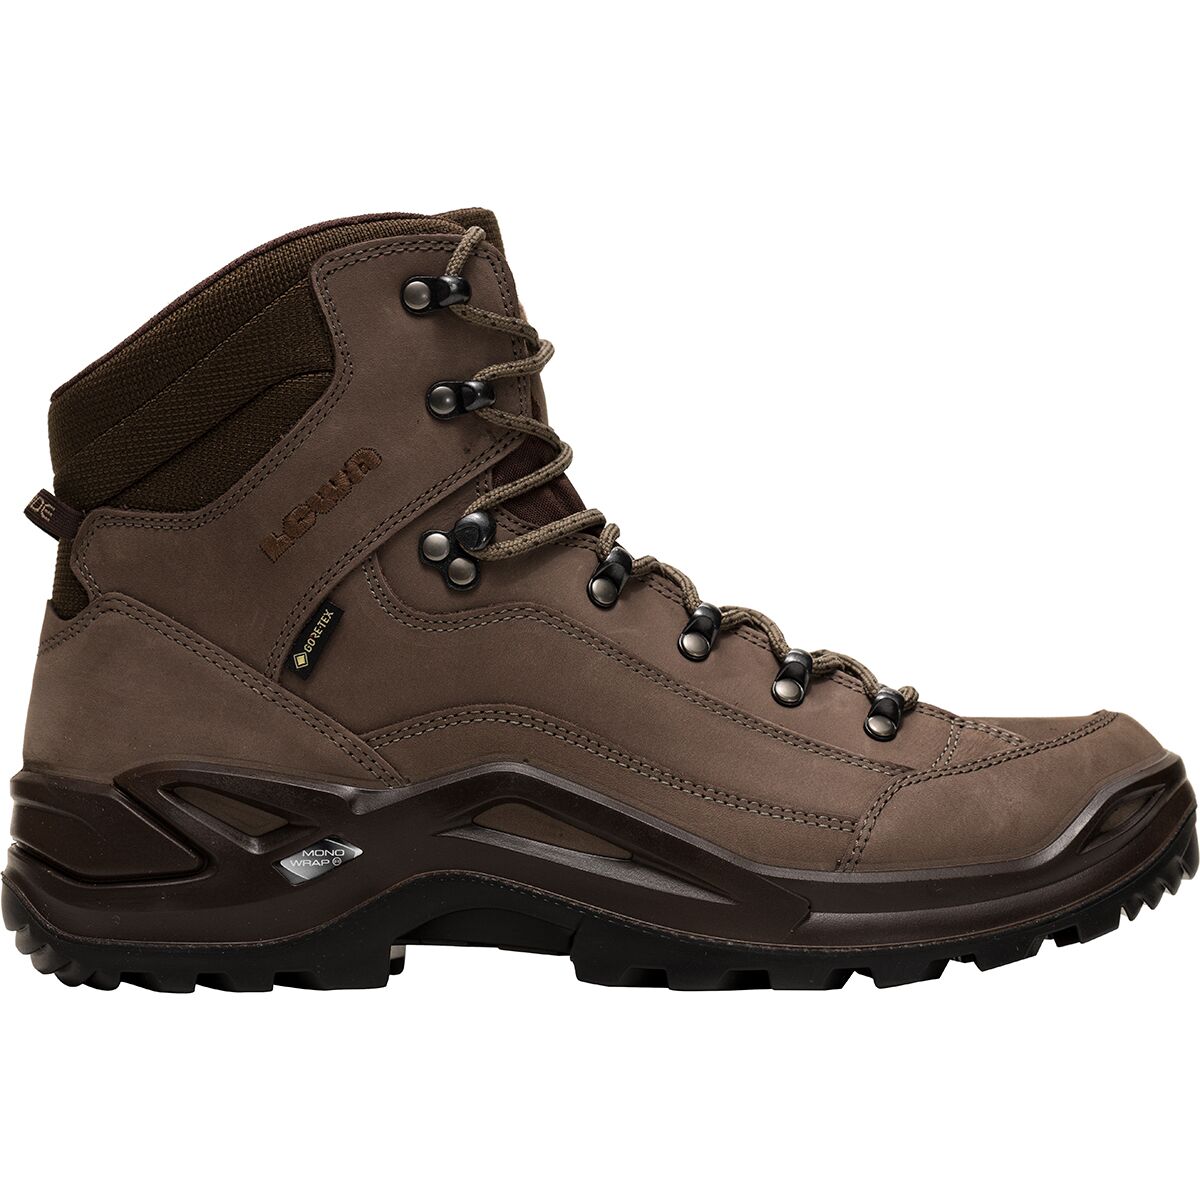 Lowa Renegade GTX Mid Hiking Boot - Men's